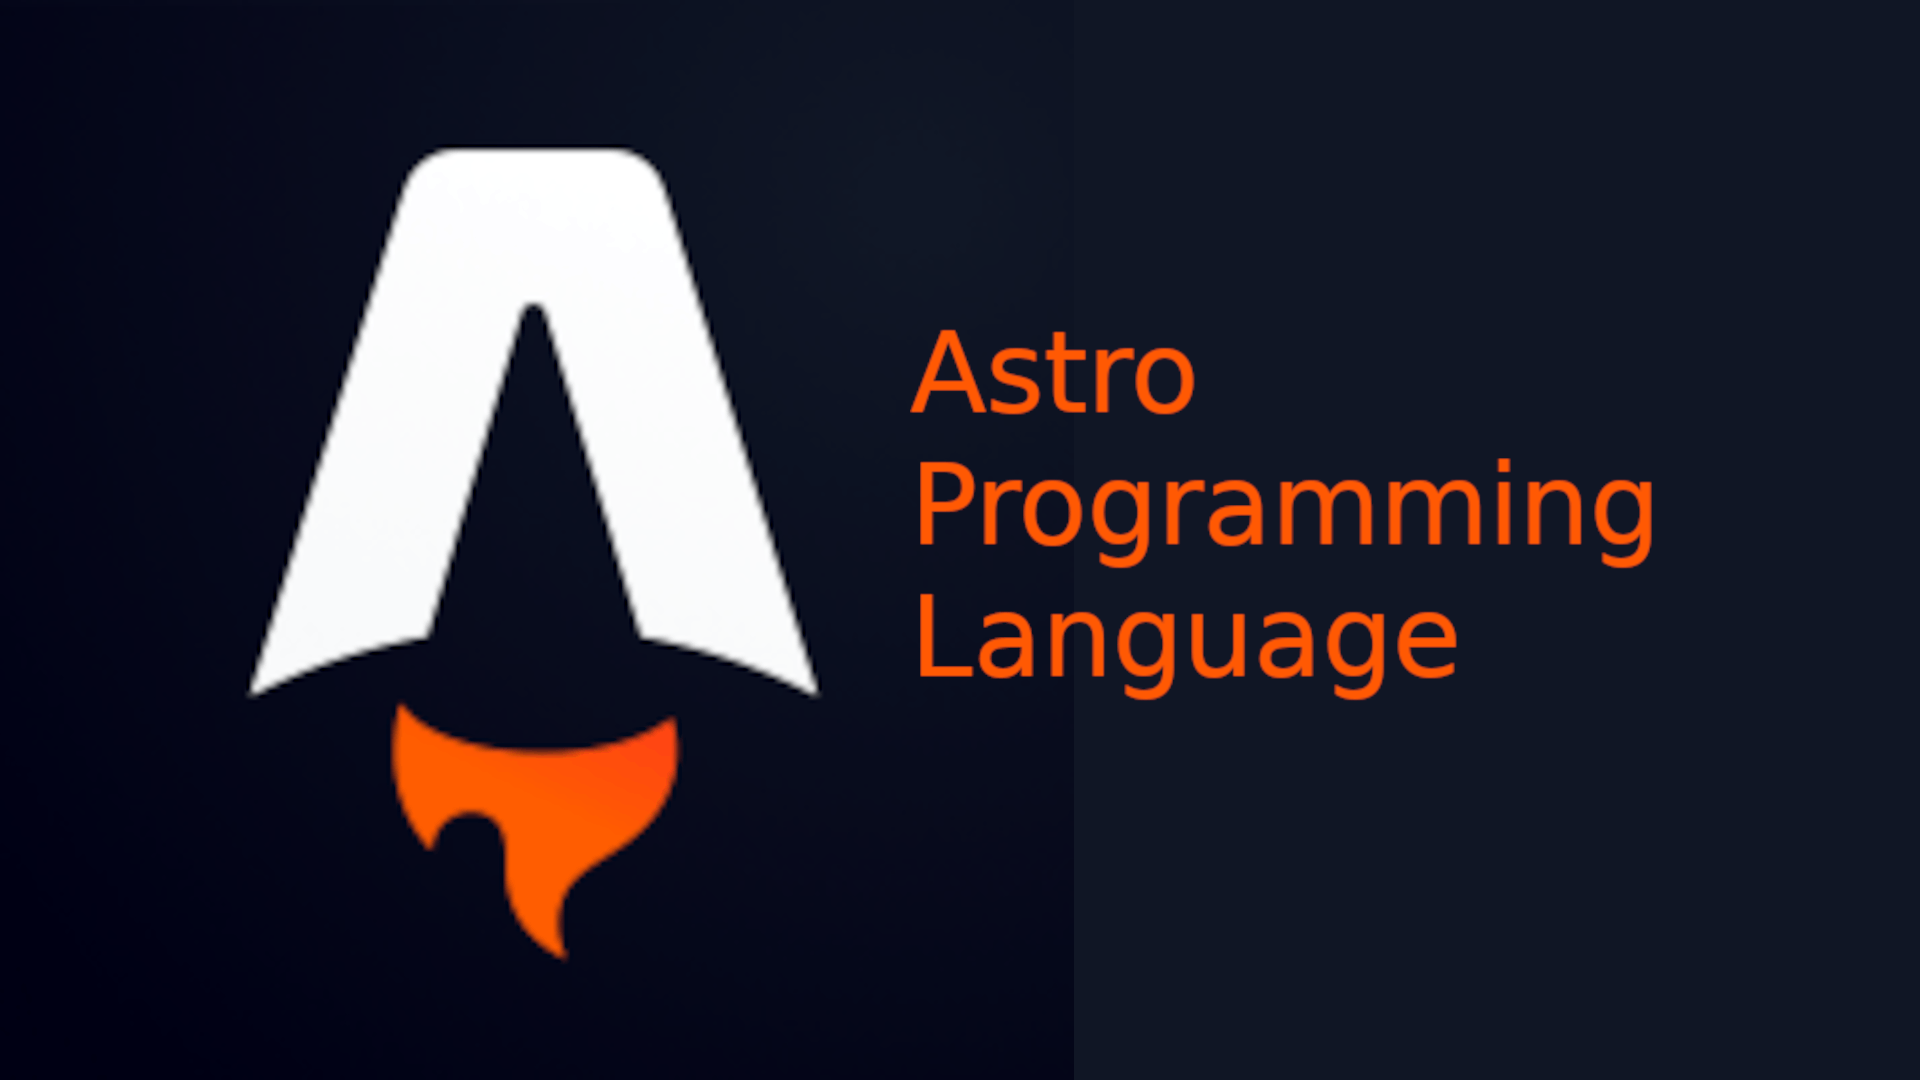 Astro: The Modern Web Development Language